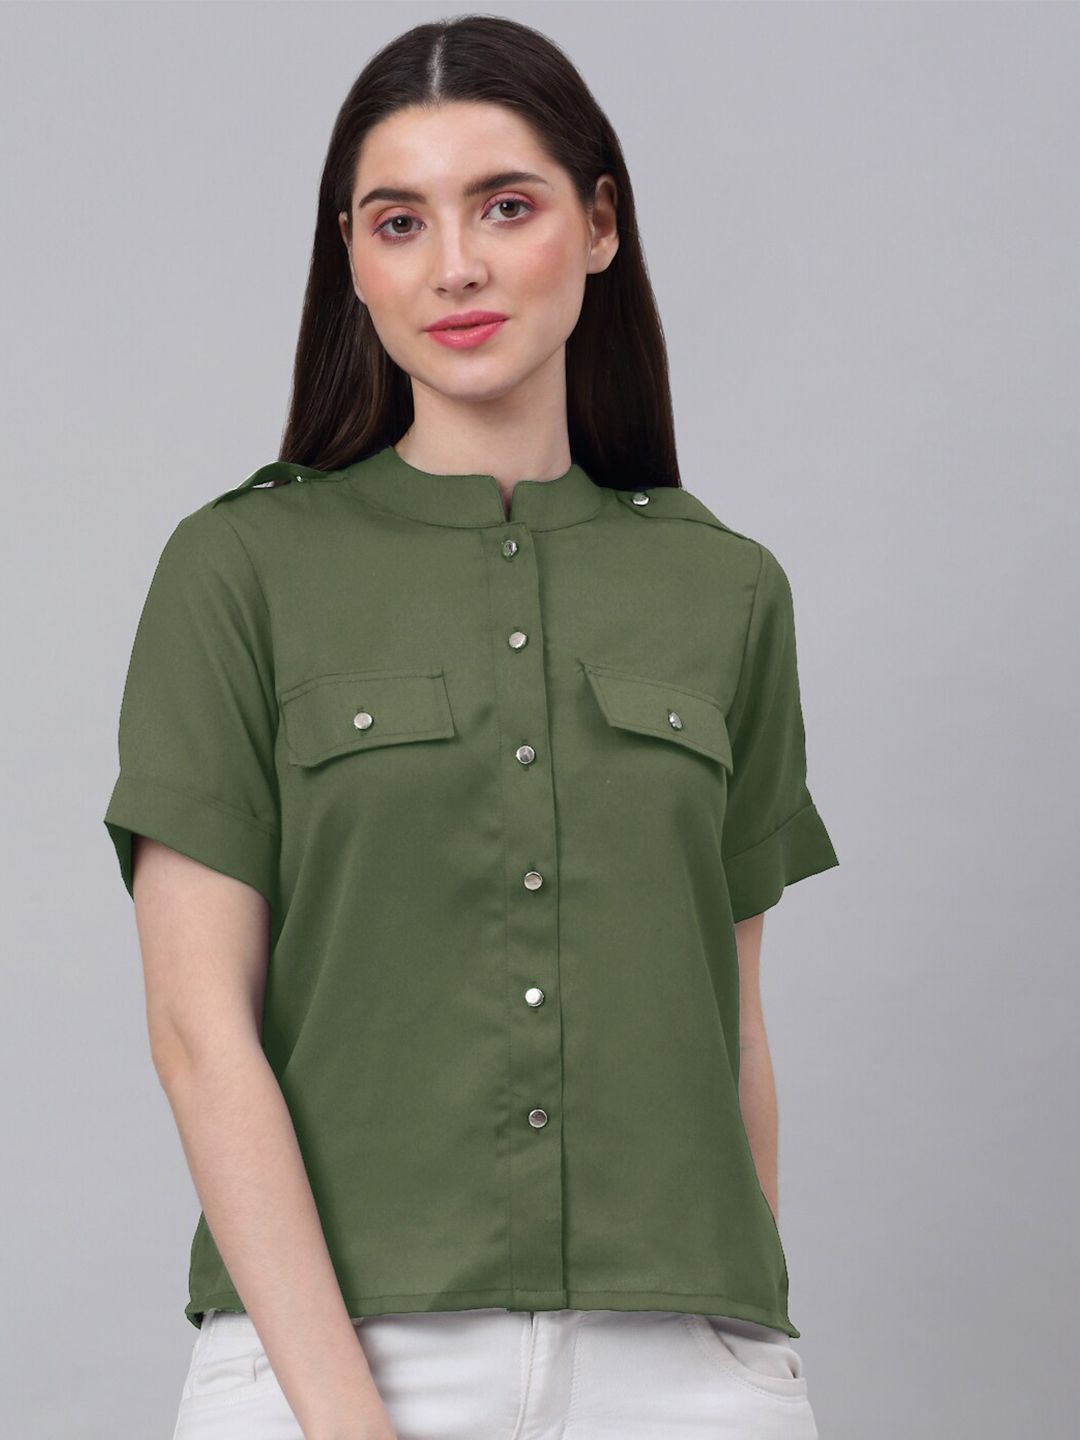 NEUDIS WOMEN Olive Green Mandarin Collar Shirt Style Top Price in India